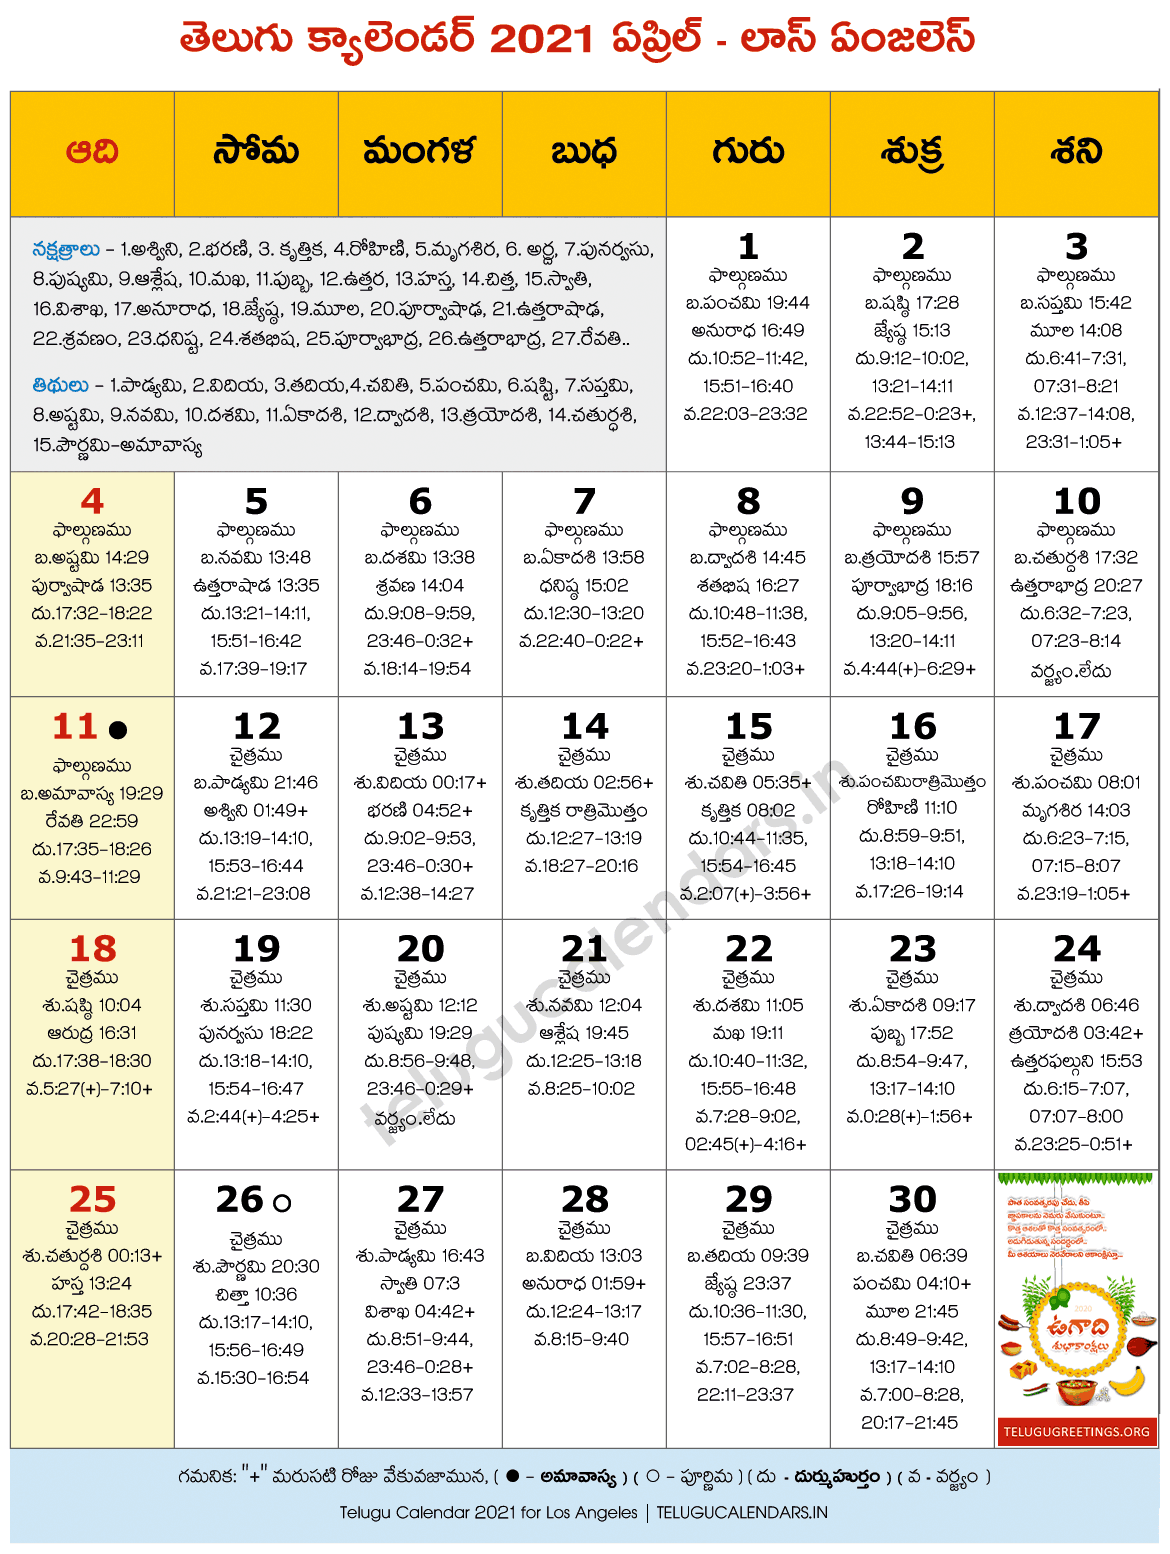 Telugu Calendar California 2022 Los Angeles 2021 April Telugu Calendar - 2022 Telugu Calendar Pdf